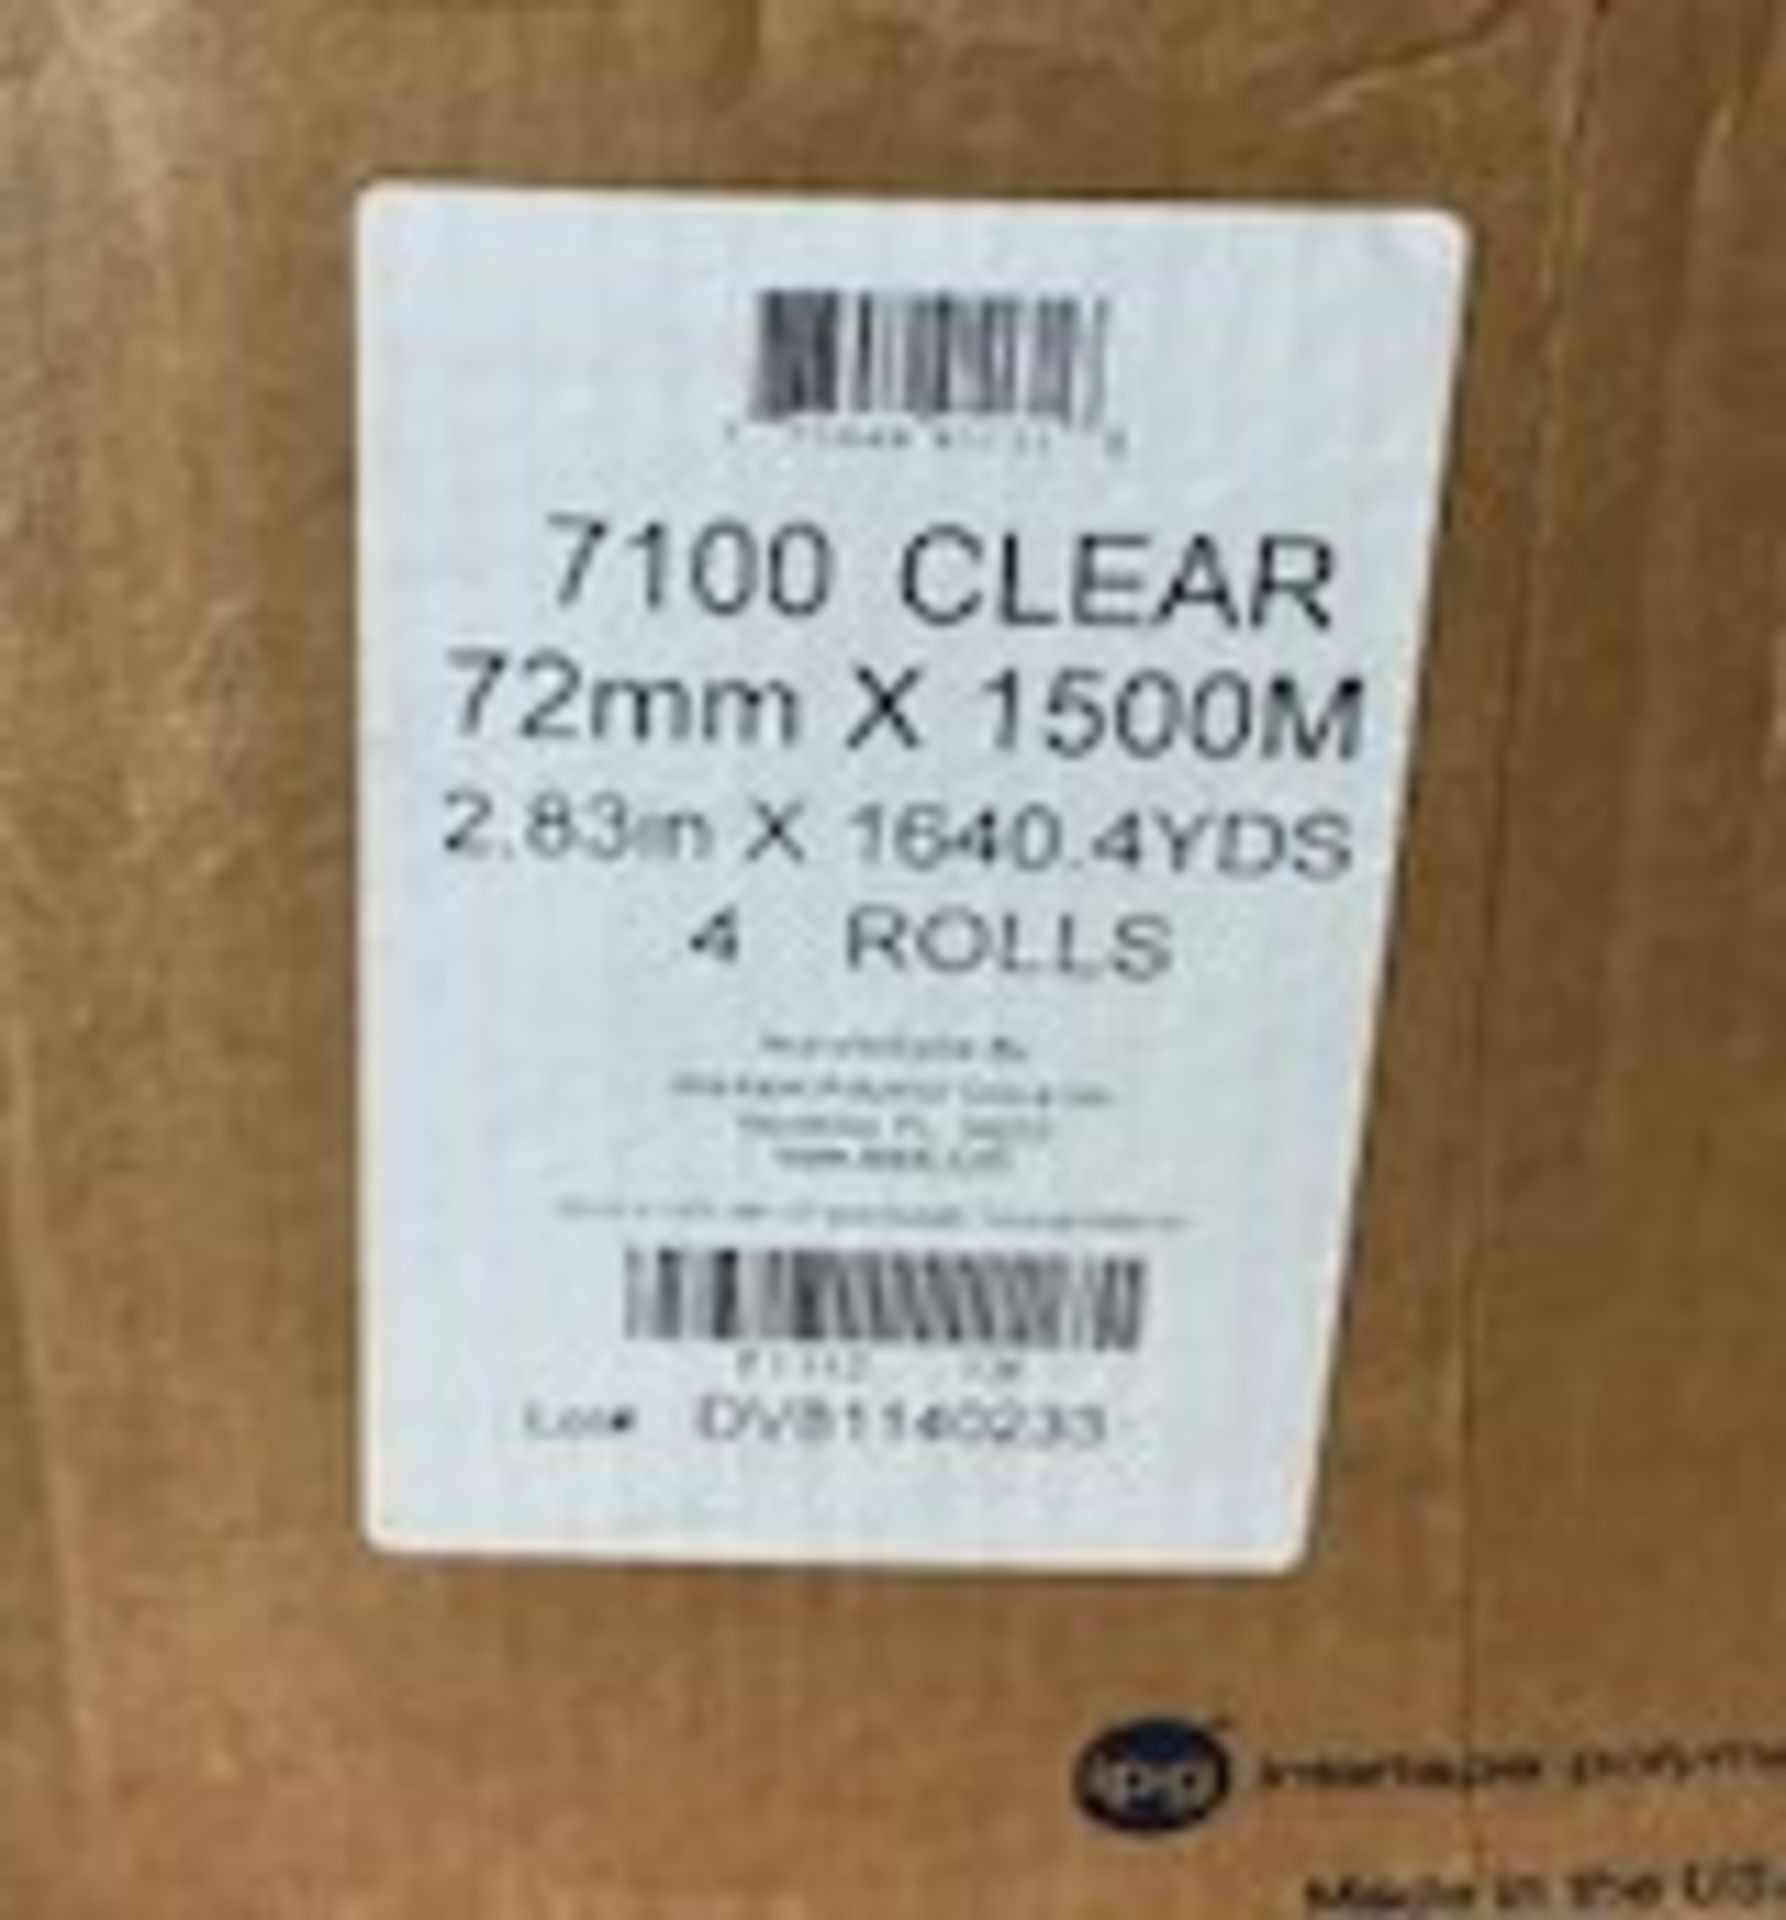 (36) Rolls - Intertape #7100 Clear 72mm x 1500M (2.83" x 1640YD) Box Sealing Tape - Image 3 of 3